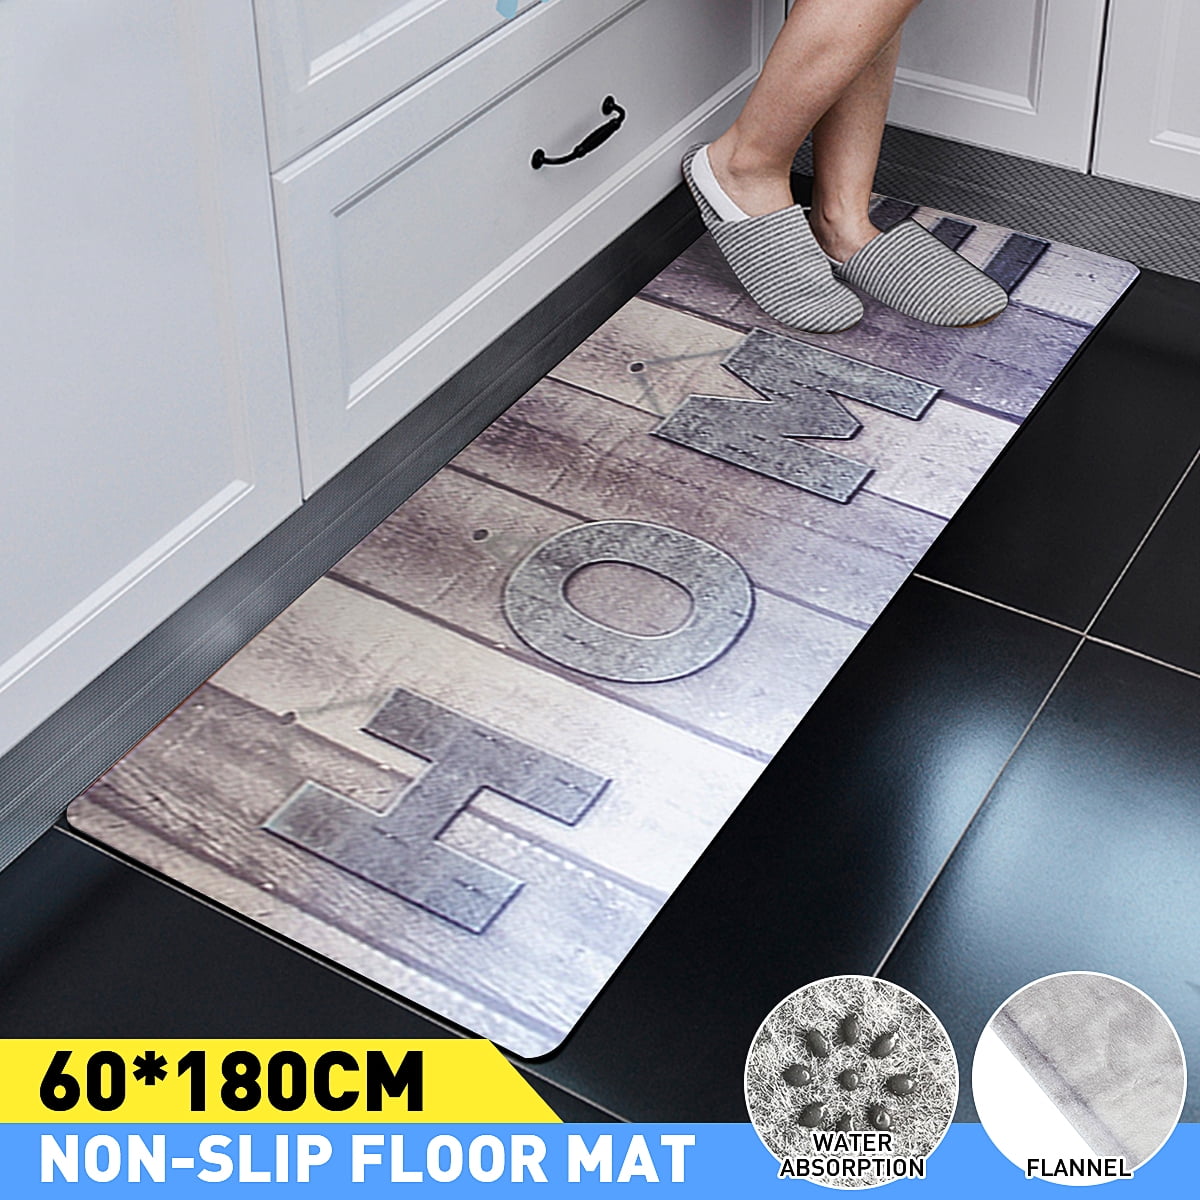 Details about   Non Slip Long Runner Rug Extra Large Small Carpet Mats Bath Bathroom Floor Mat 